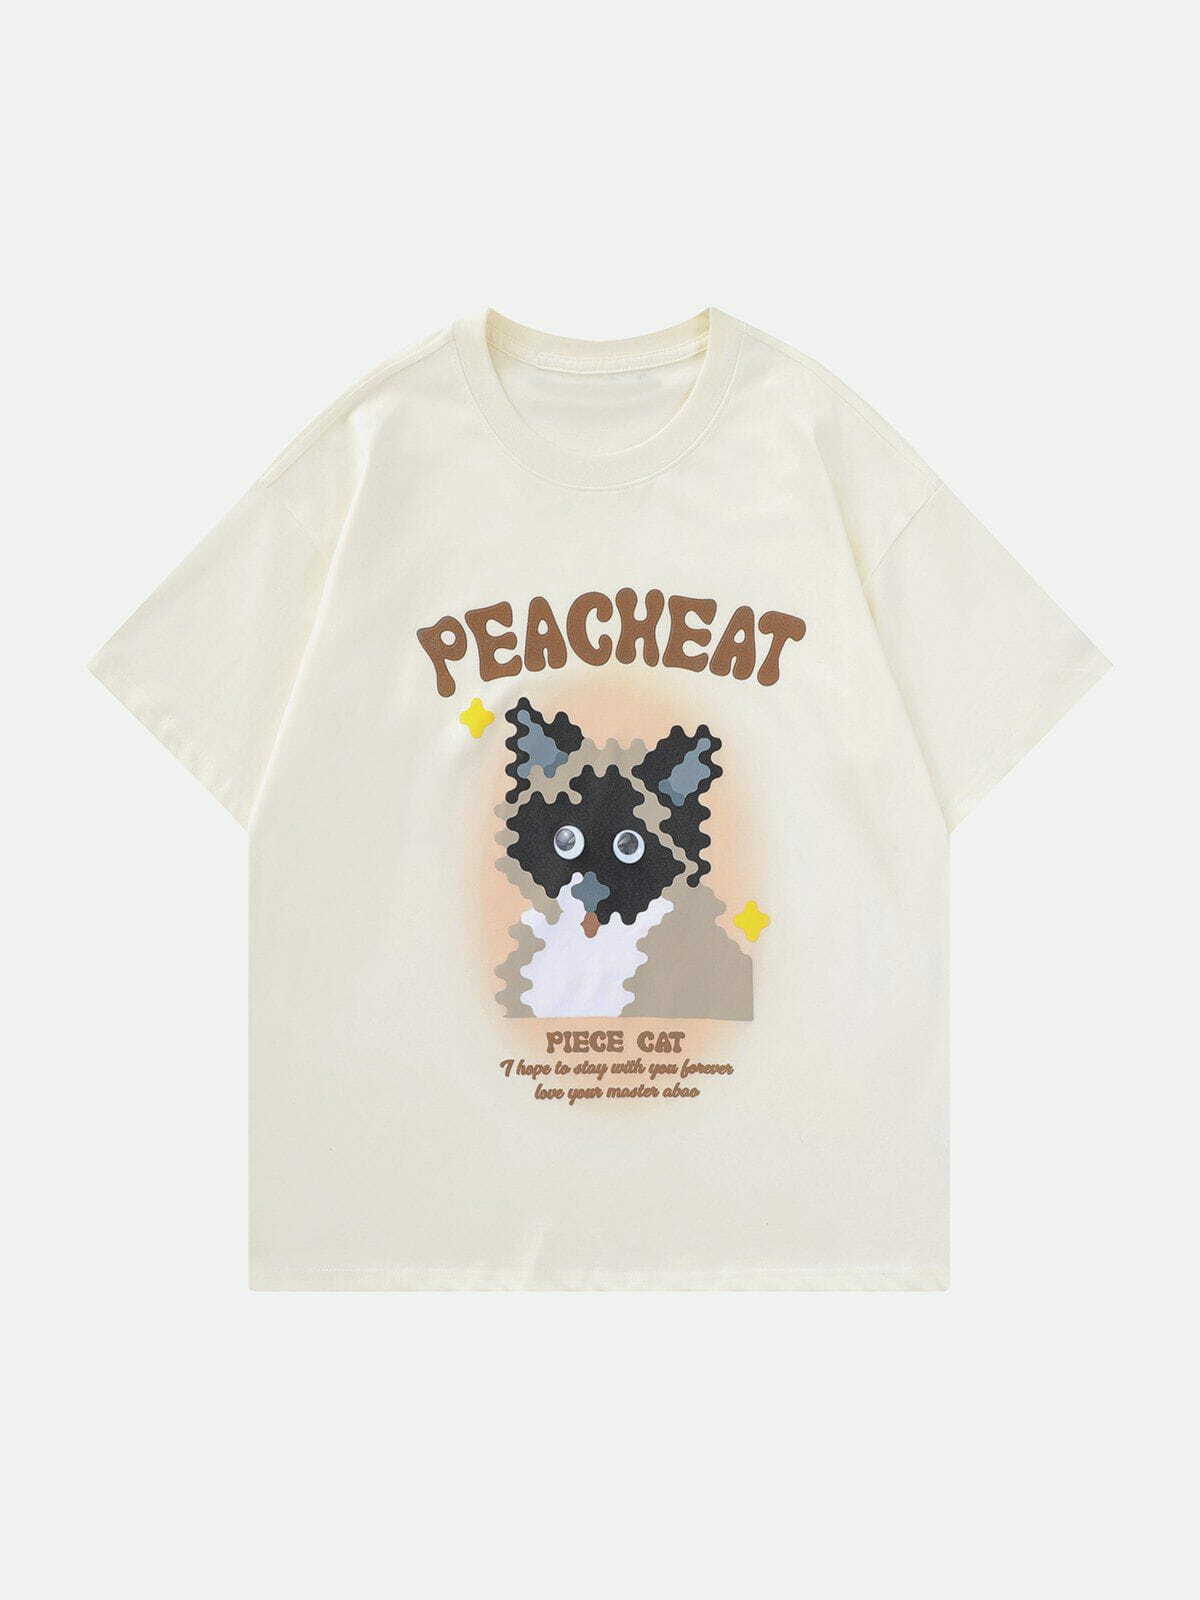 retro cat print tee edgy  vibrant streetwear shirt 8928